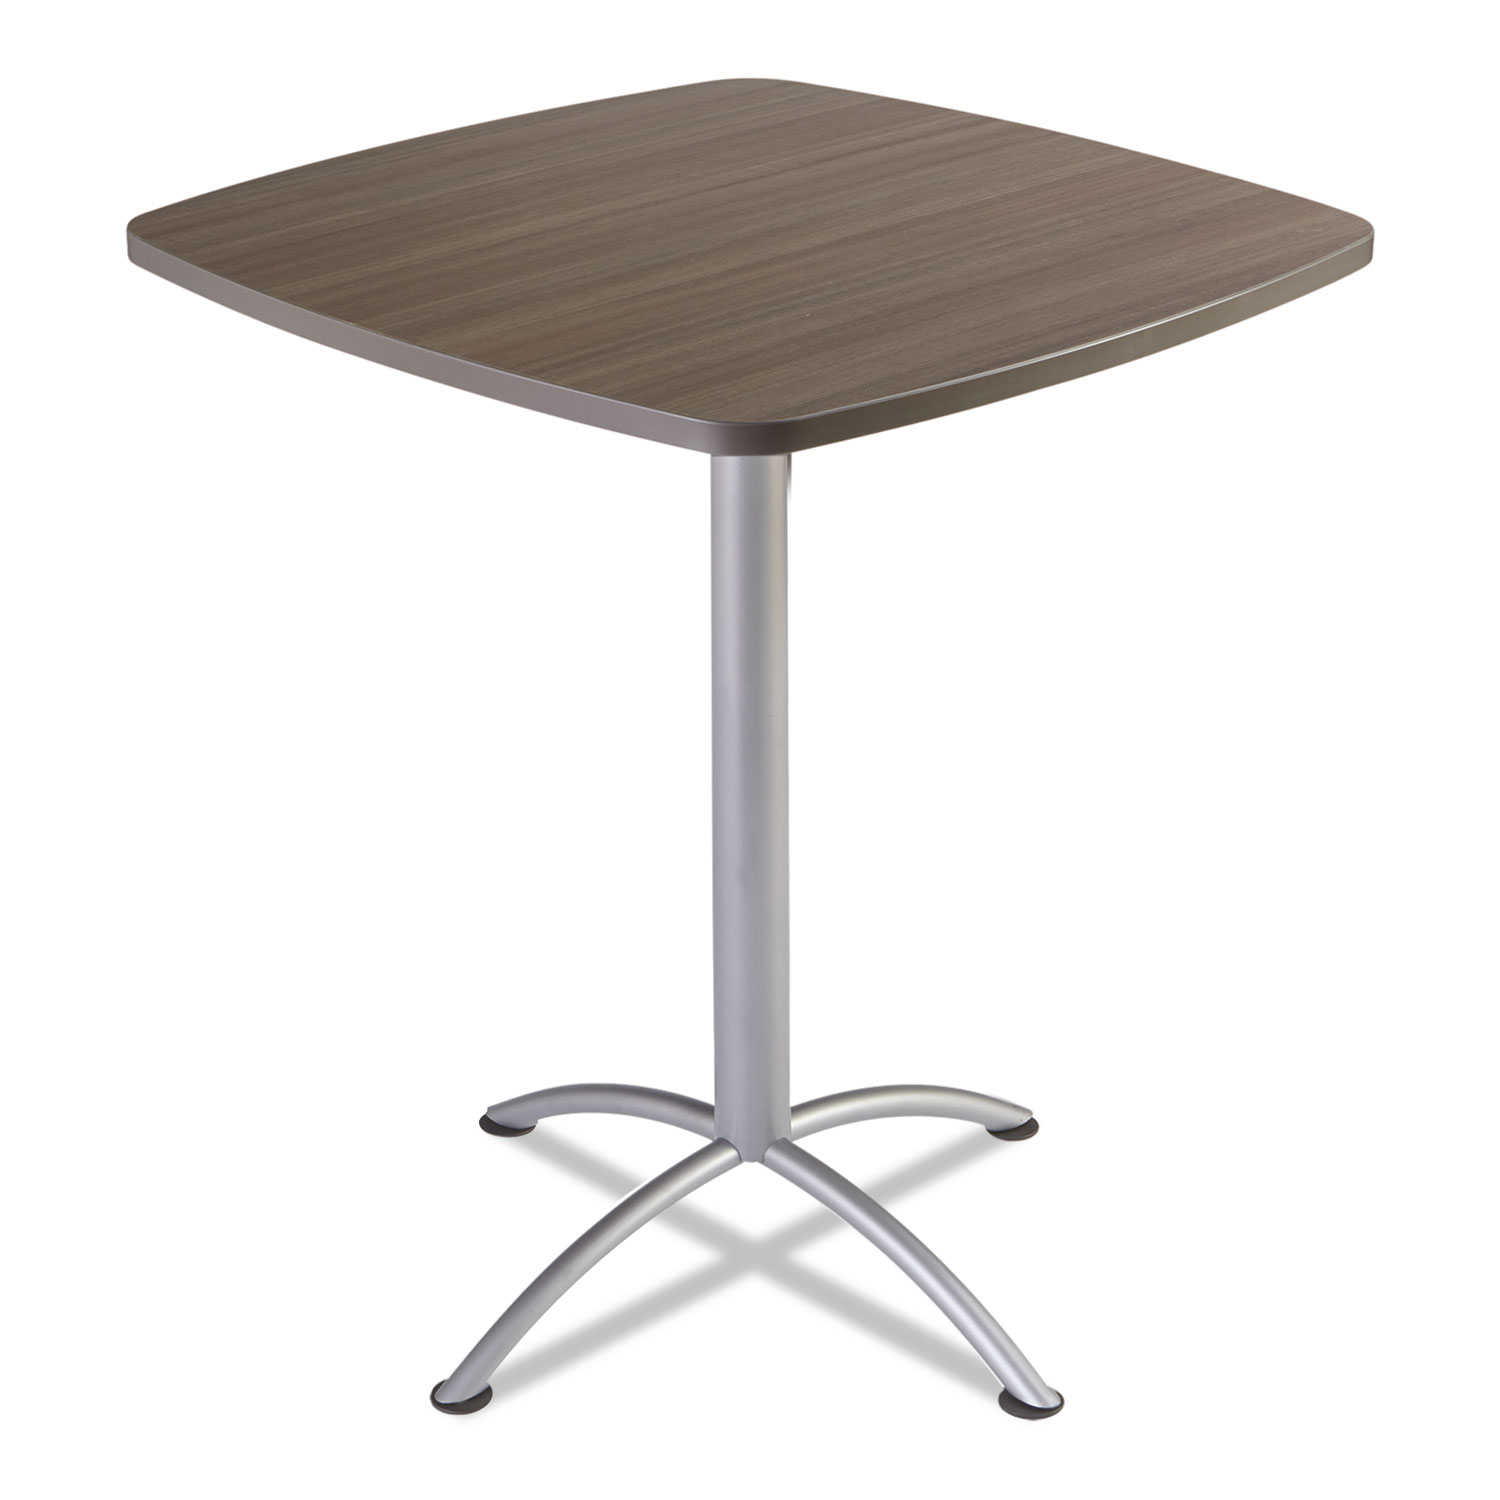 iLand Table, Contour, Square Bistro Style, 36 x 36 x 42, Natural Teak/Silver